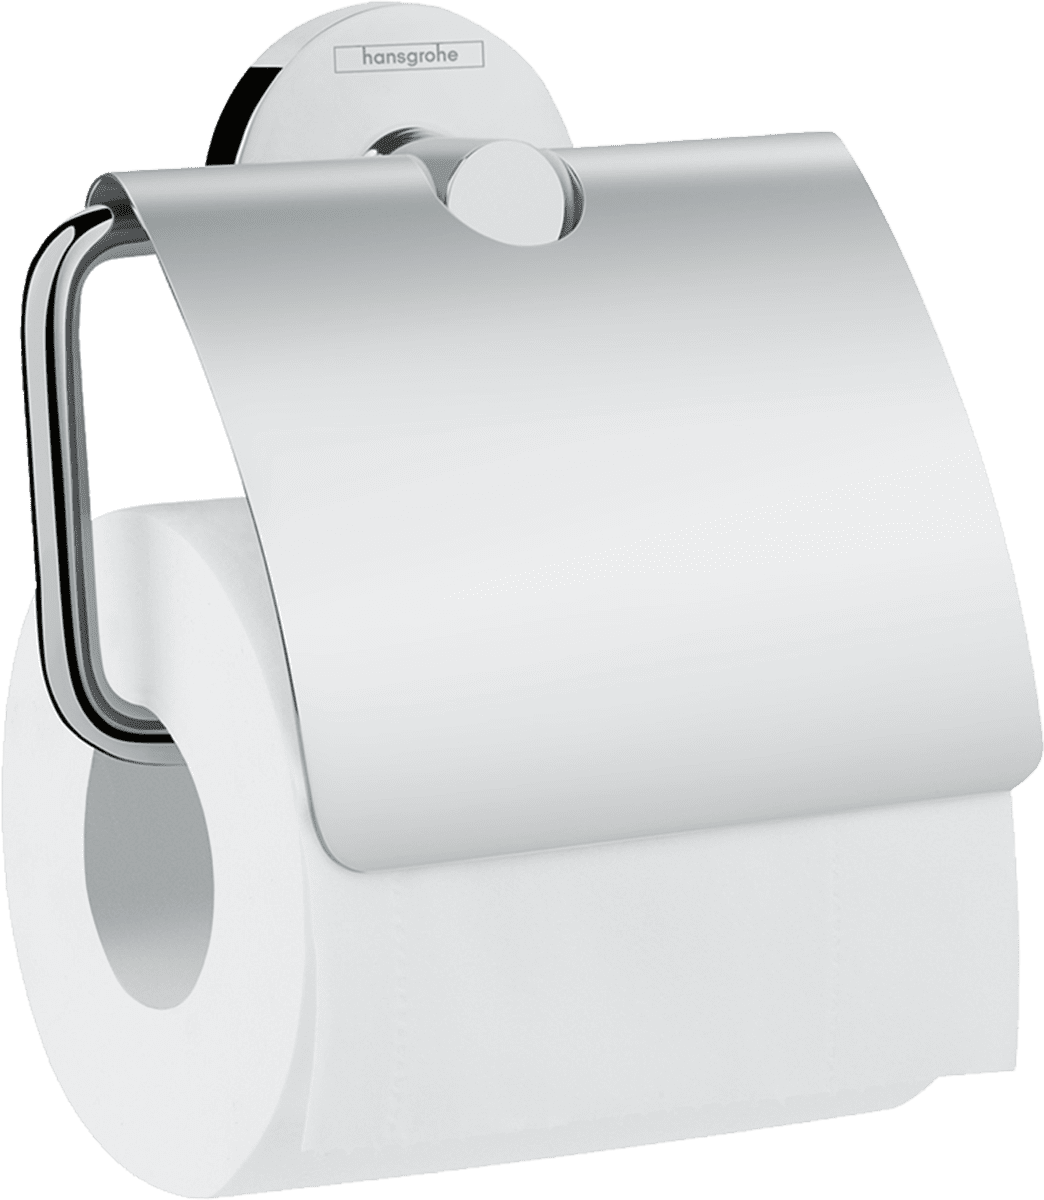 HANSGROHE Logis Universal Tuvalet kağıtlığı kapak ile #41723000 - Krom resmi